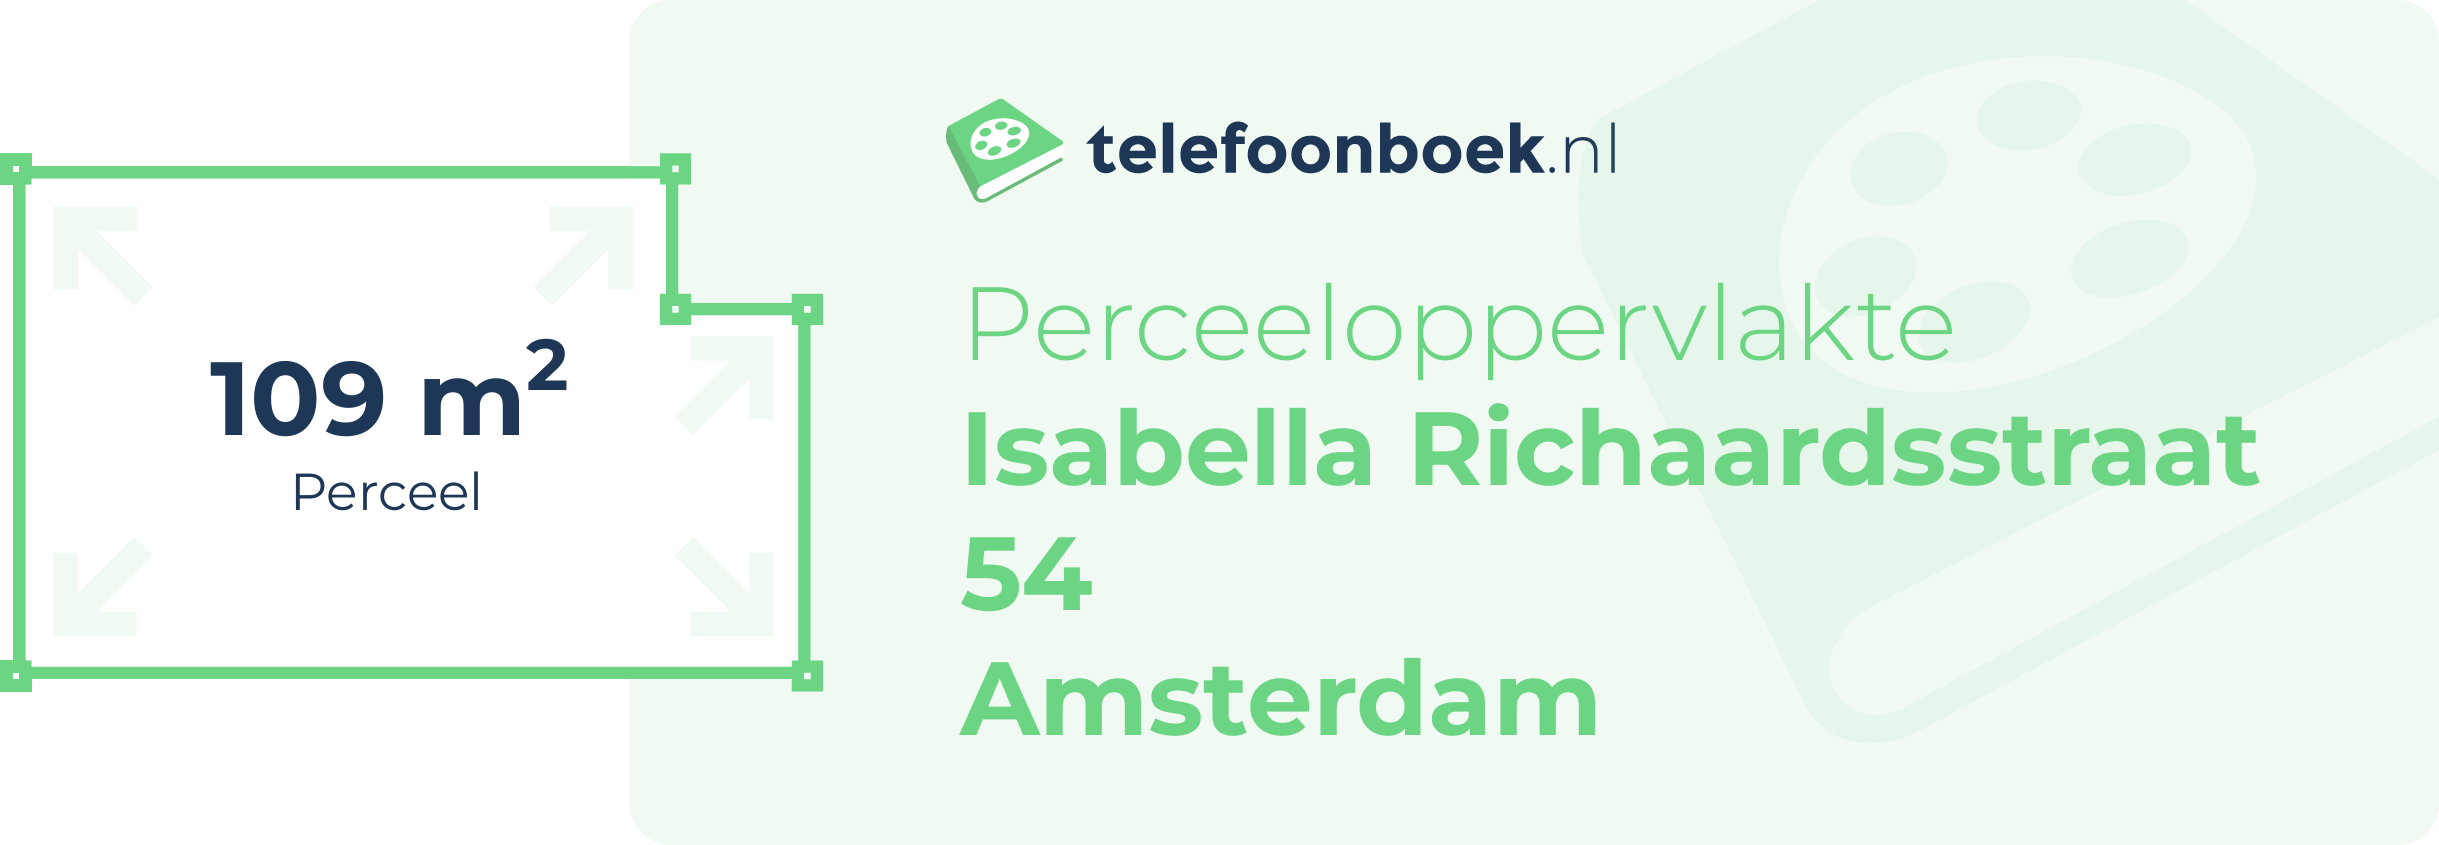 Perceeloppervlakte Isabella Richaardsstraat 54 Amsterdam